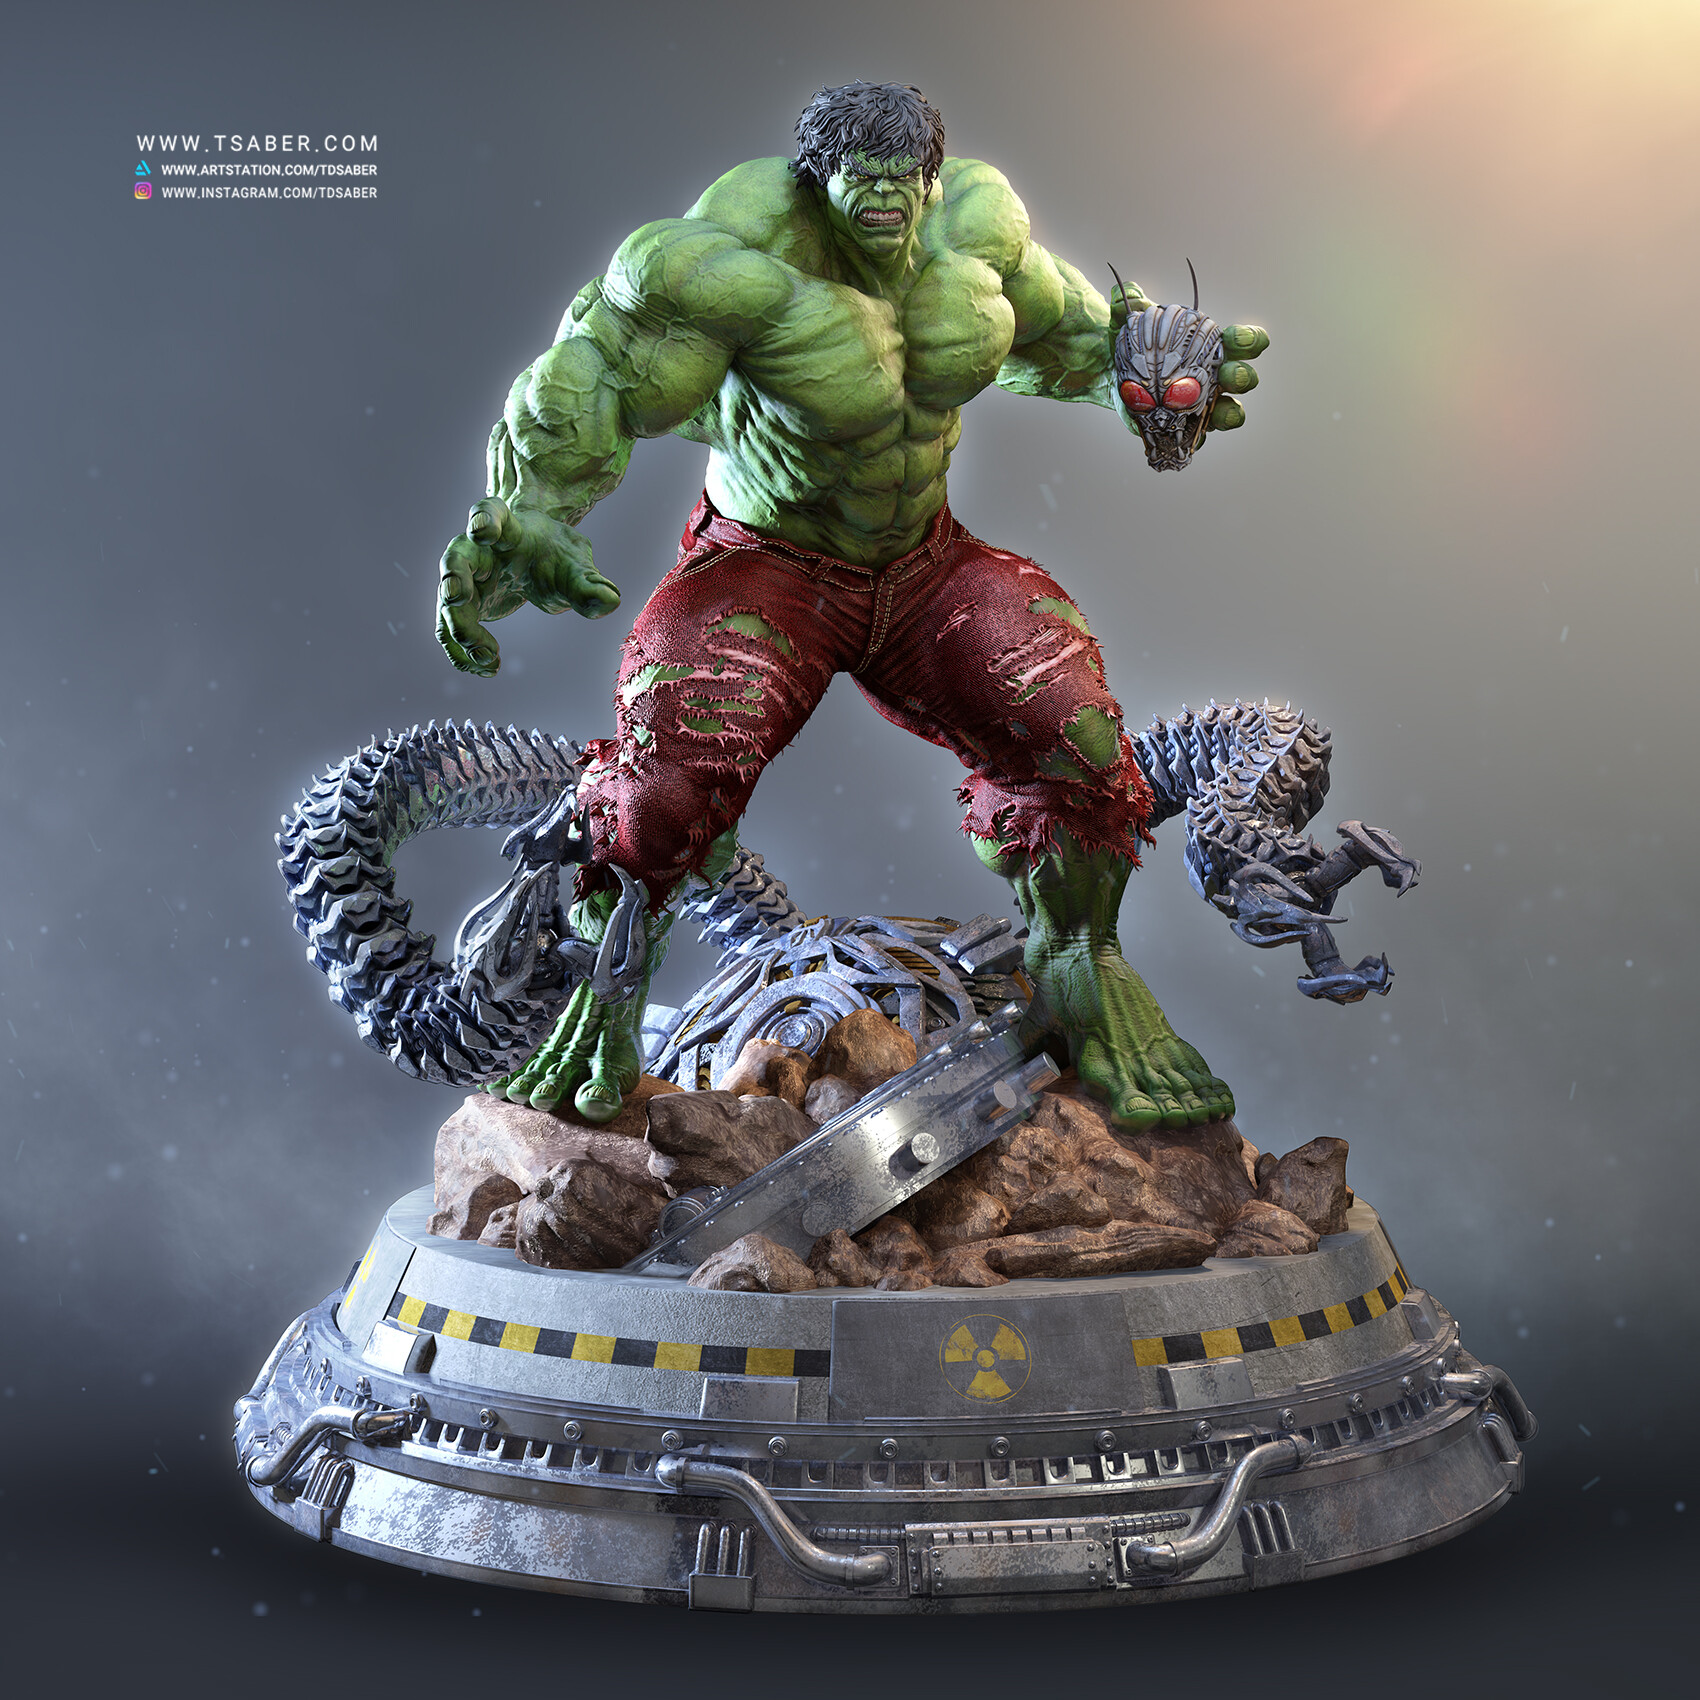 Incredible Hulk Figurine Marvel Collectible Statue Avengers Figure 